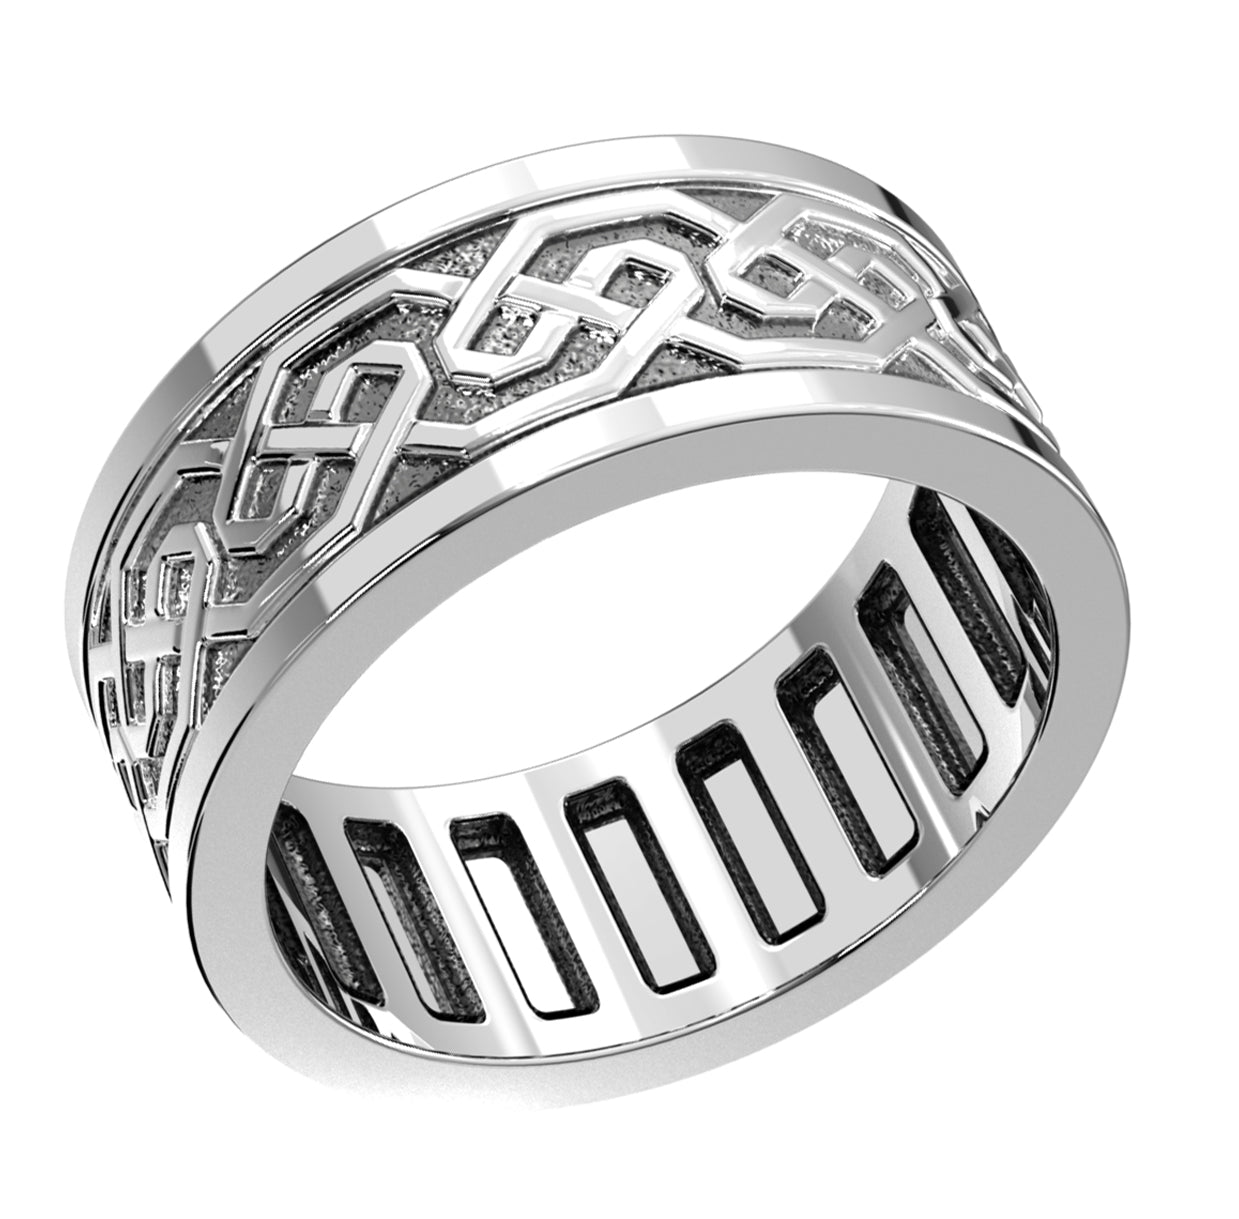 Men's 7mm 925 Sterling Silver Irish Celtic Knot Wedding Spinner Ring Band